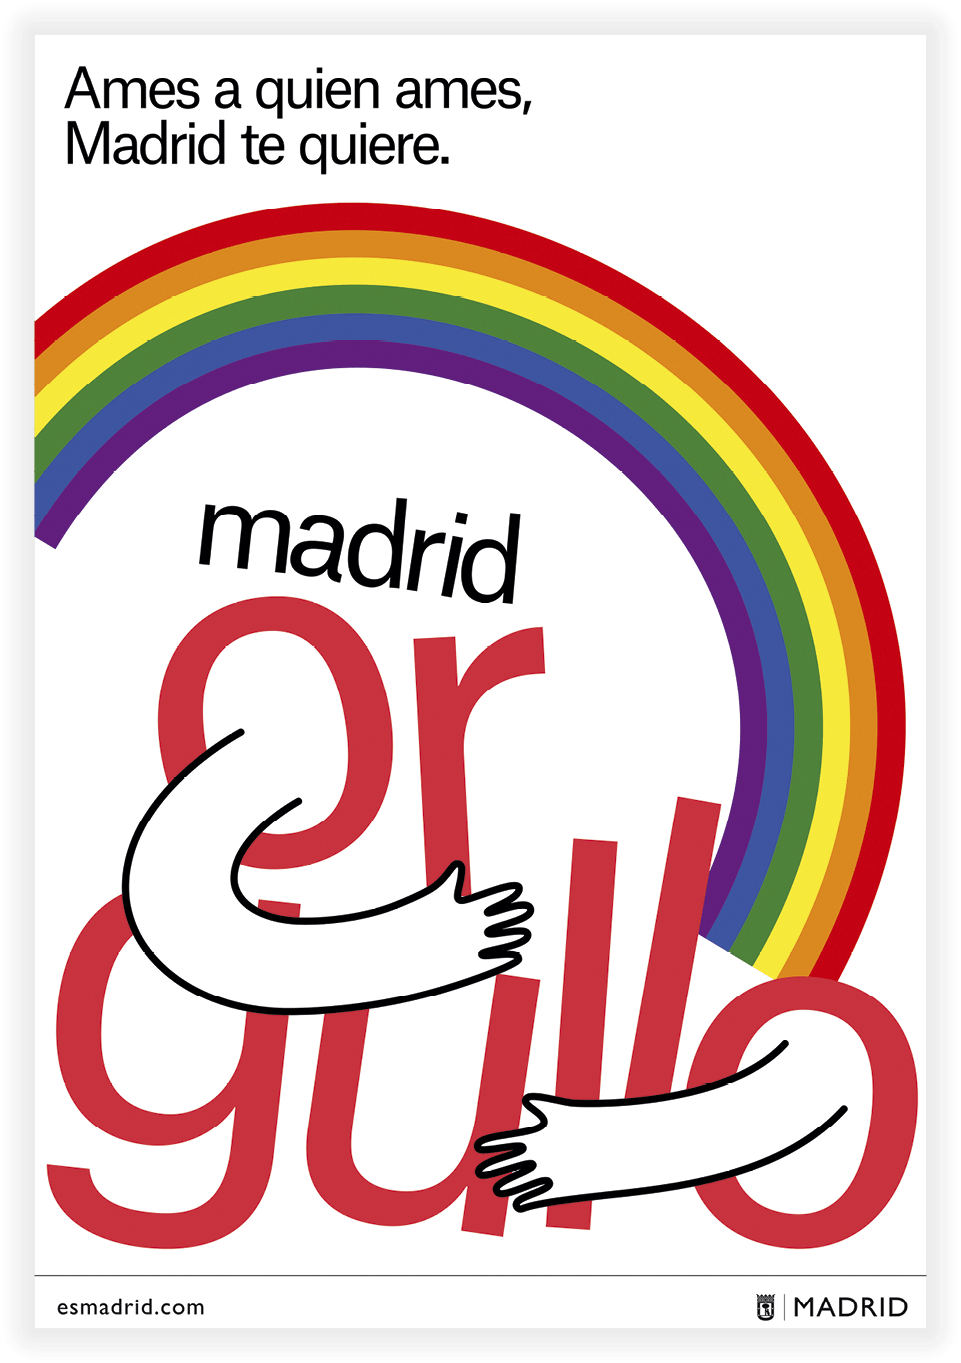 Campaña «Madrid te abraza», Erretres, 2018